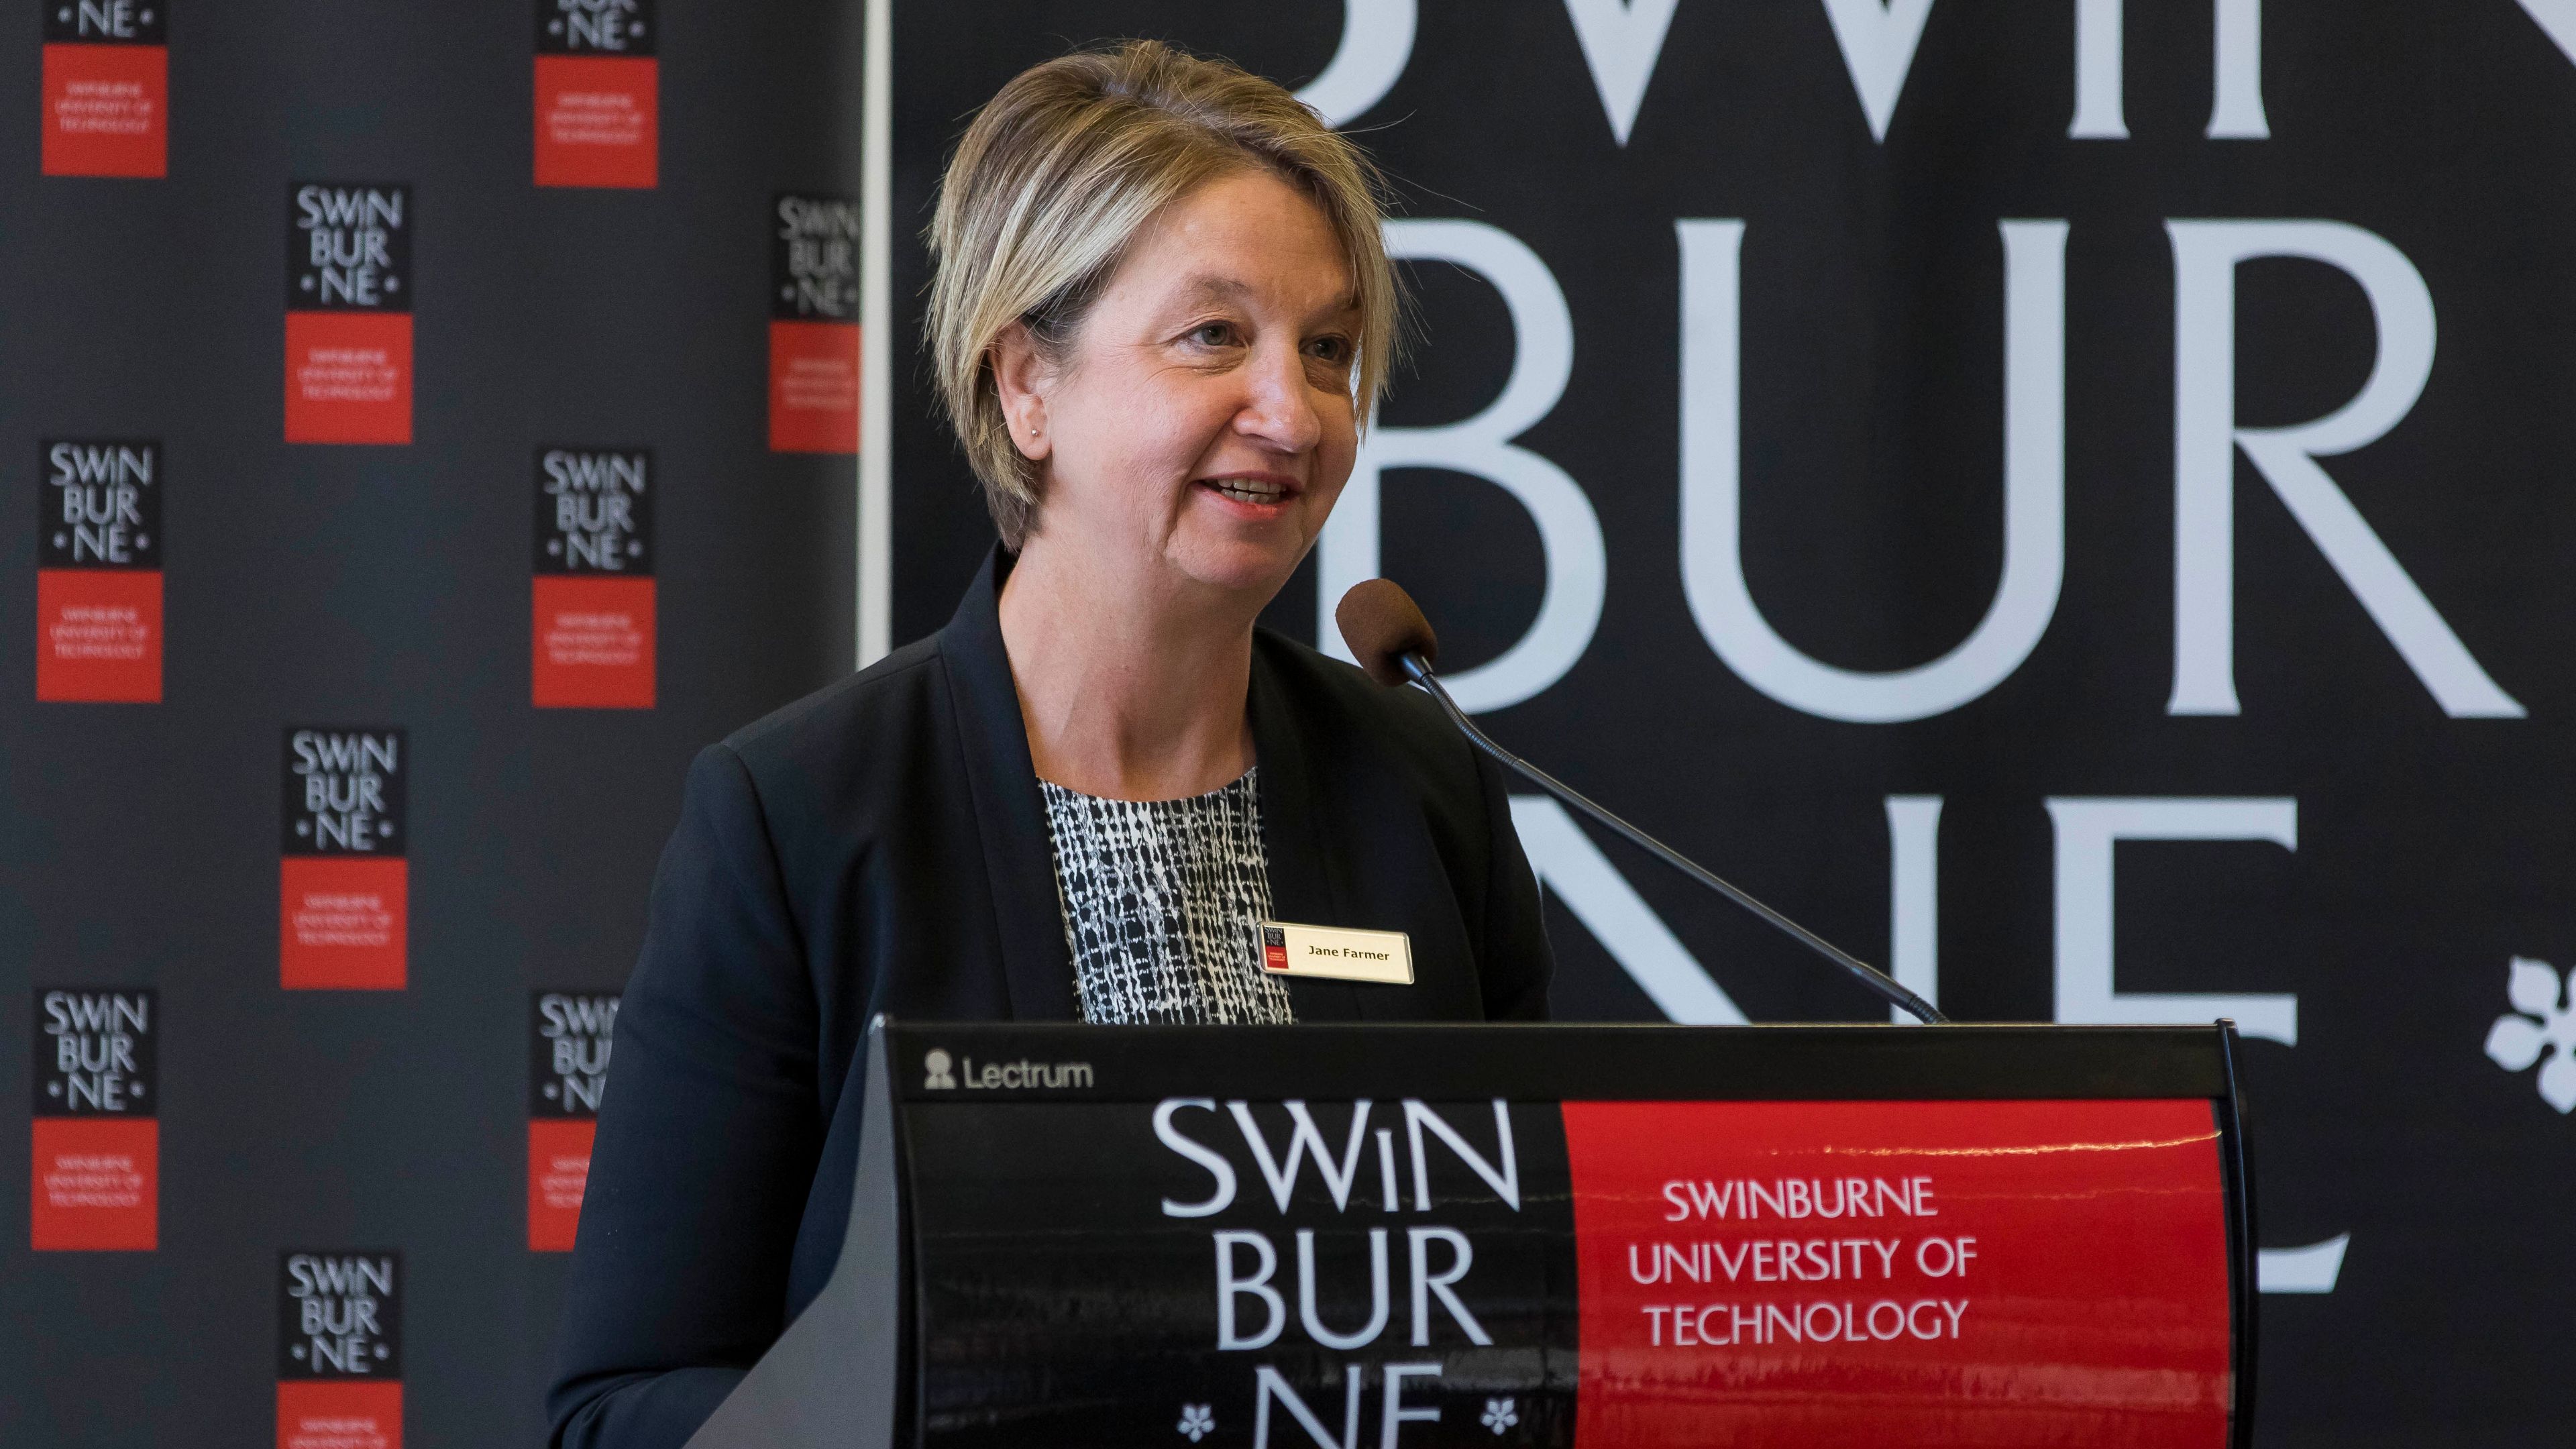 Jane Farmer speaking at a Swinburne branded microphone podium.